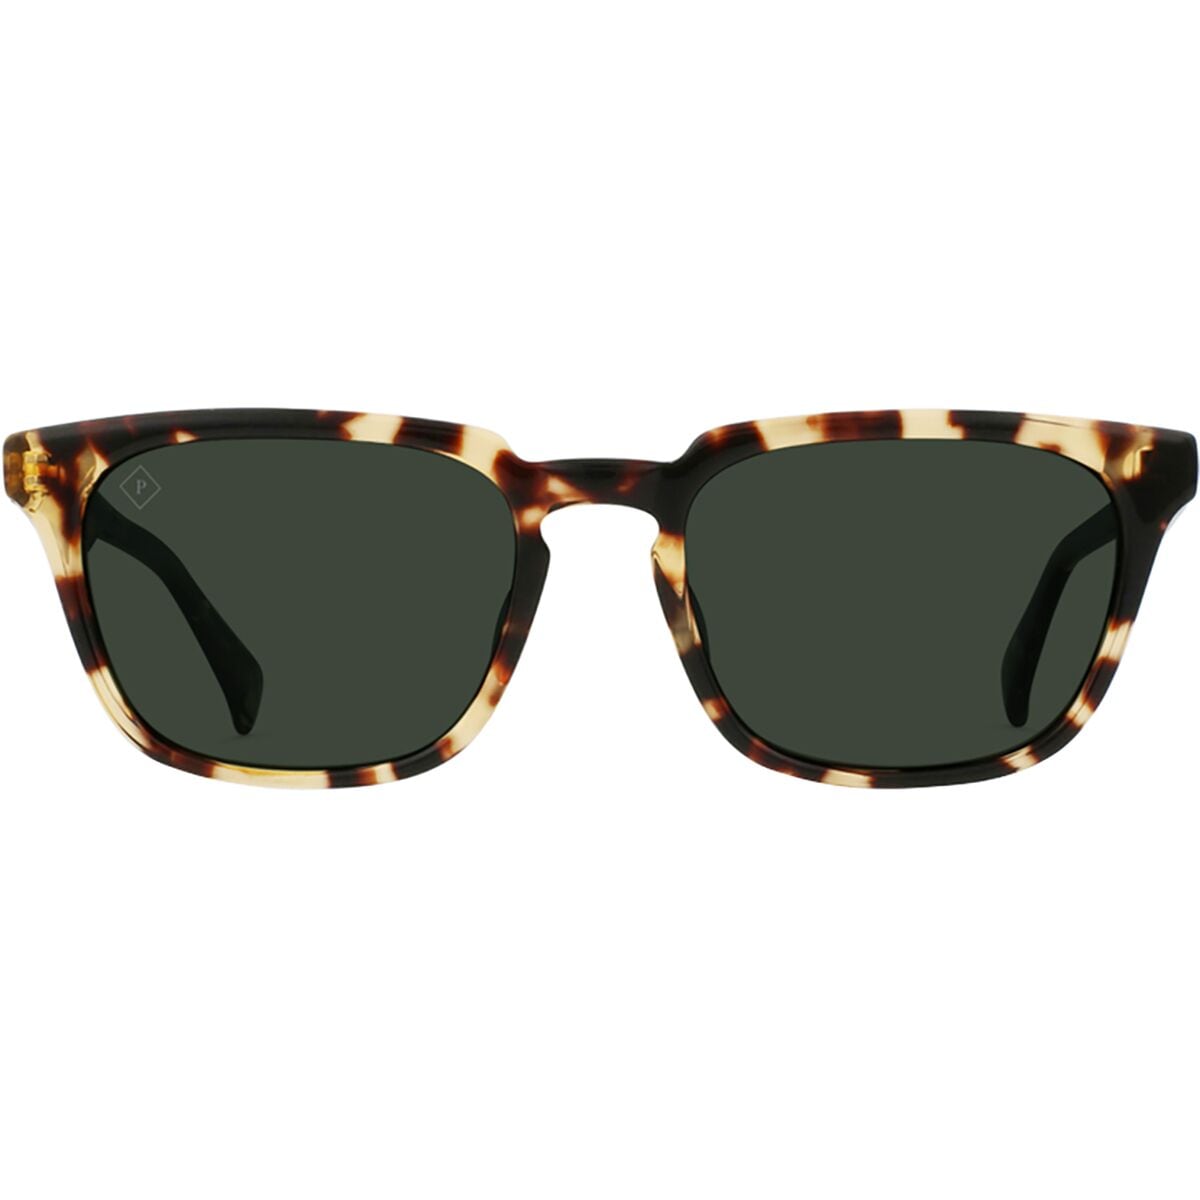 RAEN optics Hirsch Polarized Sunglasses | eBay